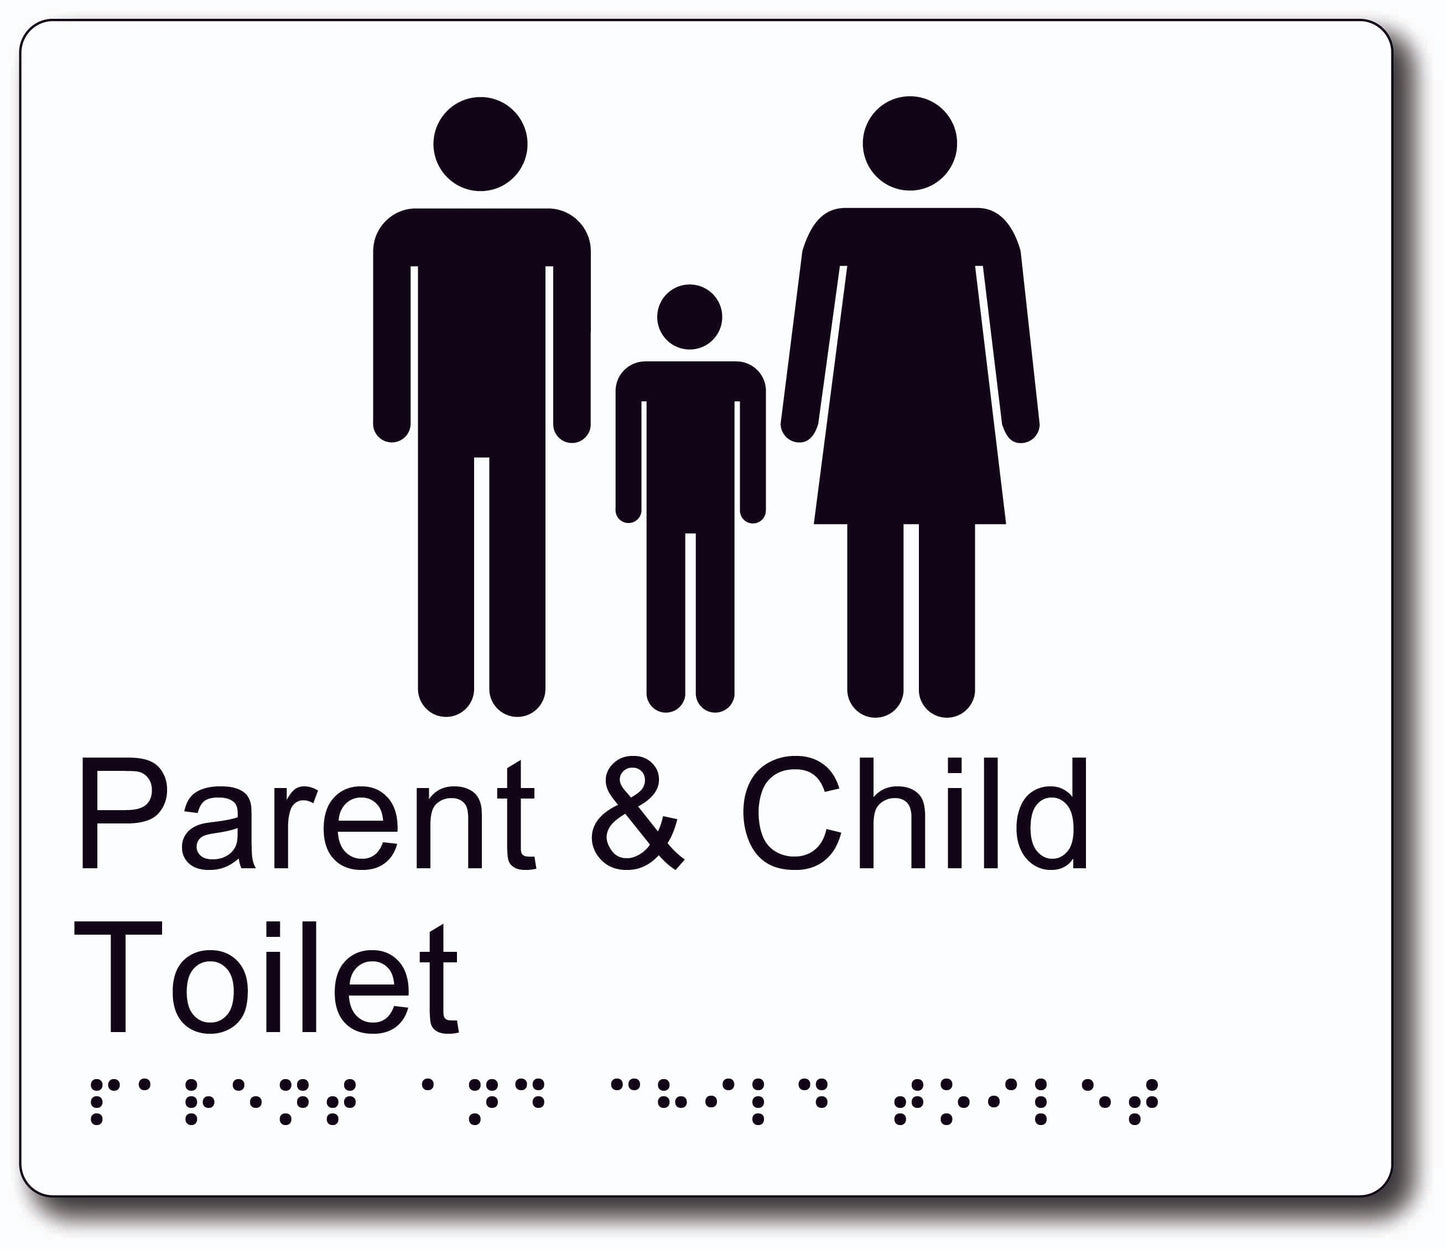 Parent & Child Toilet